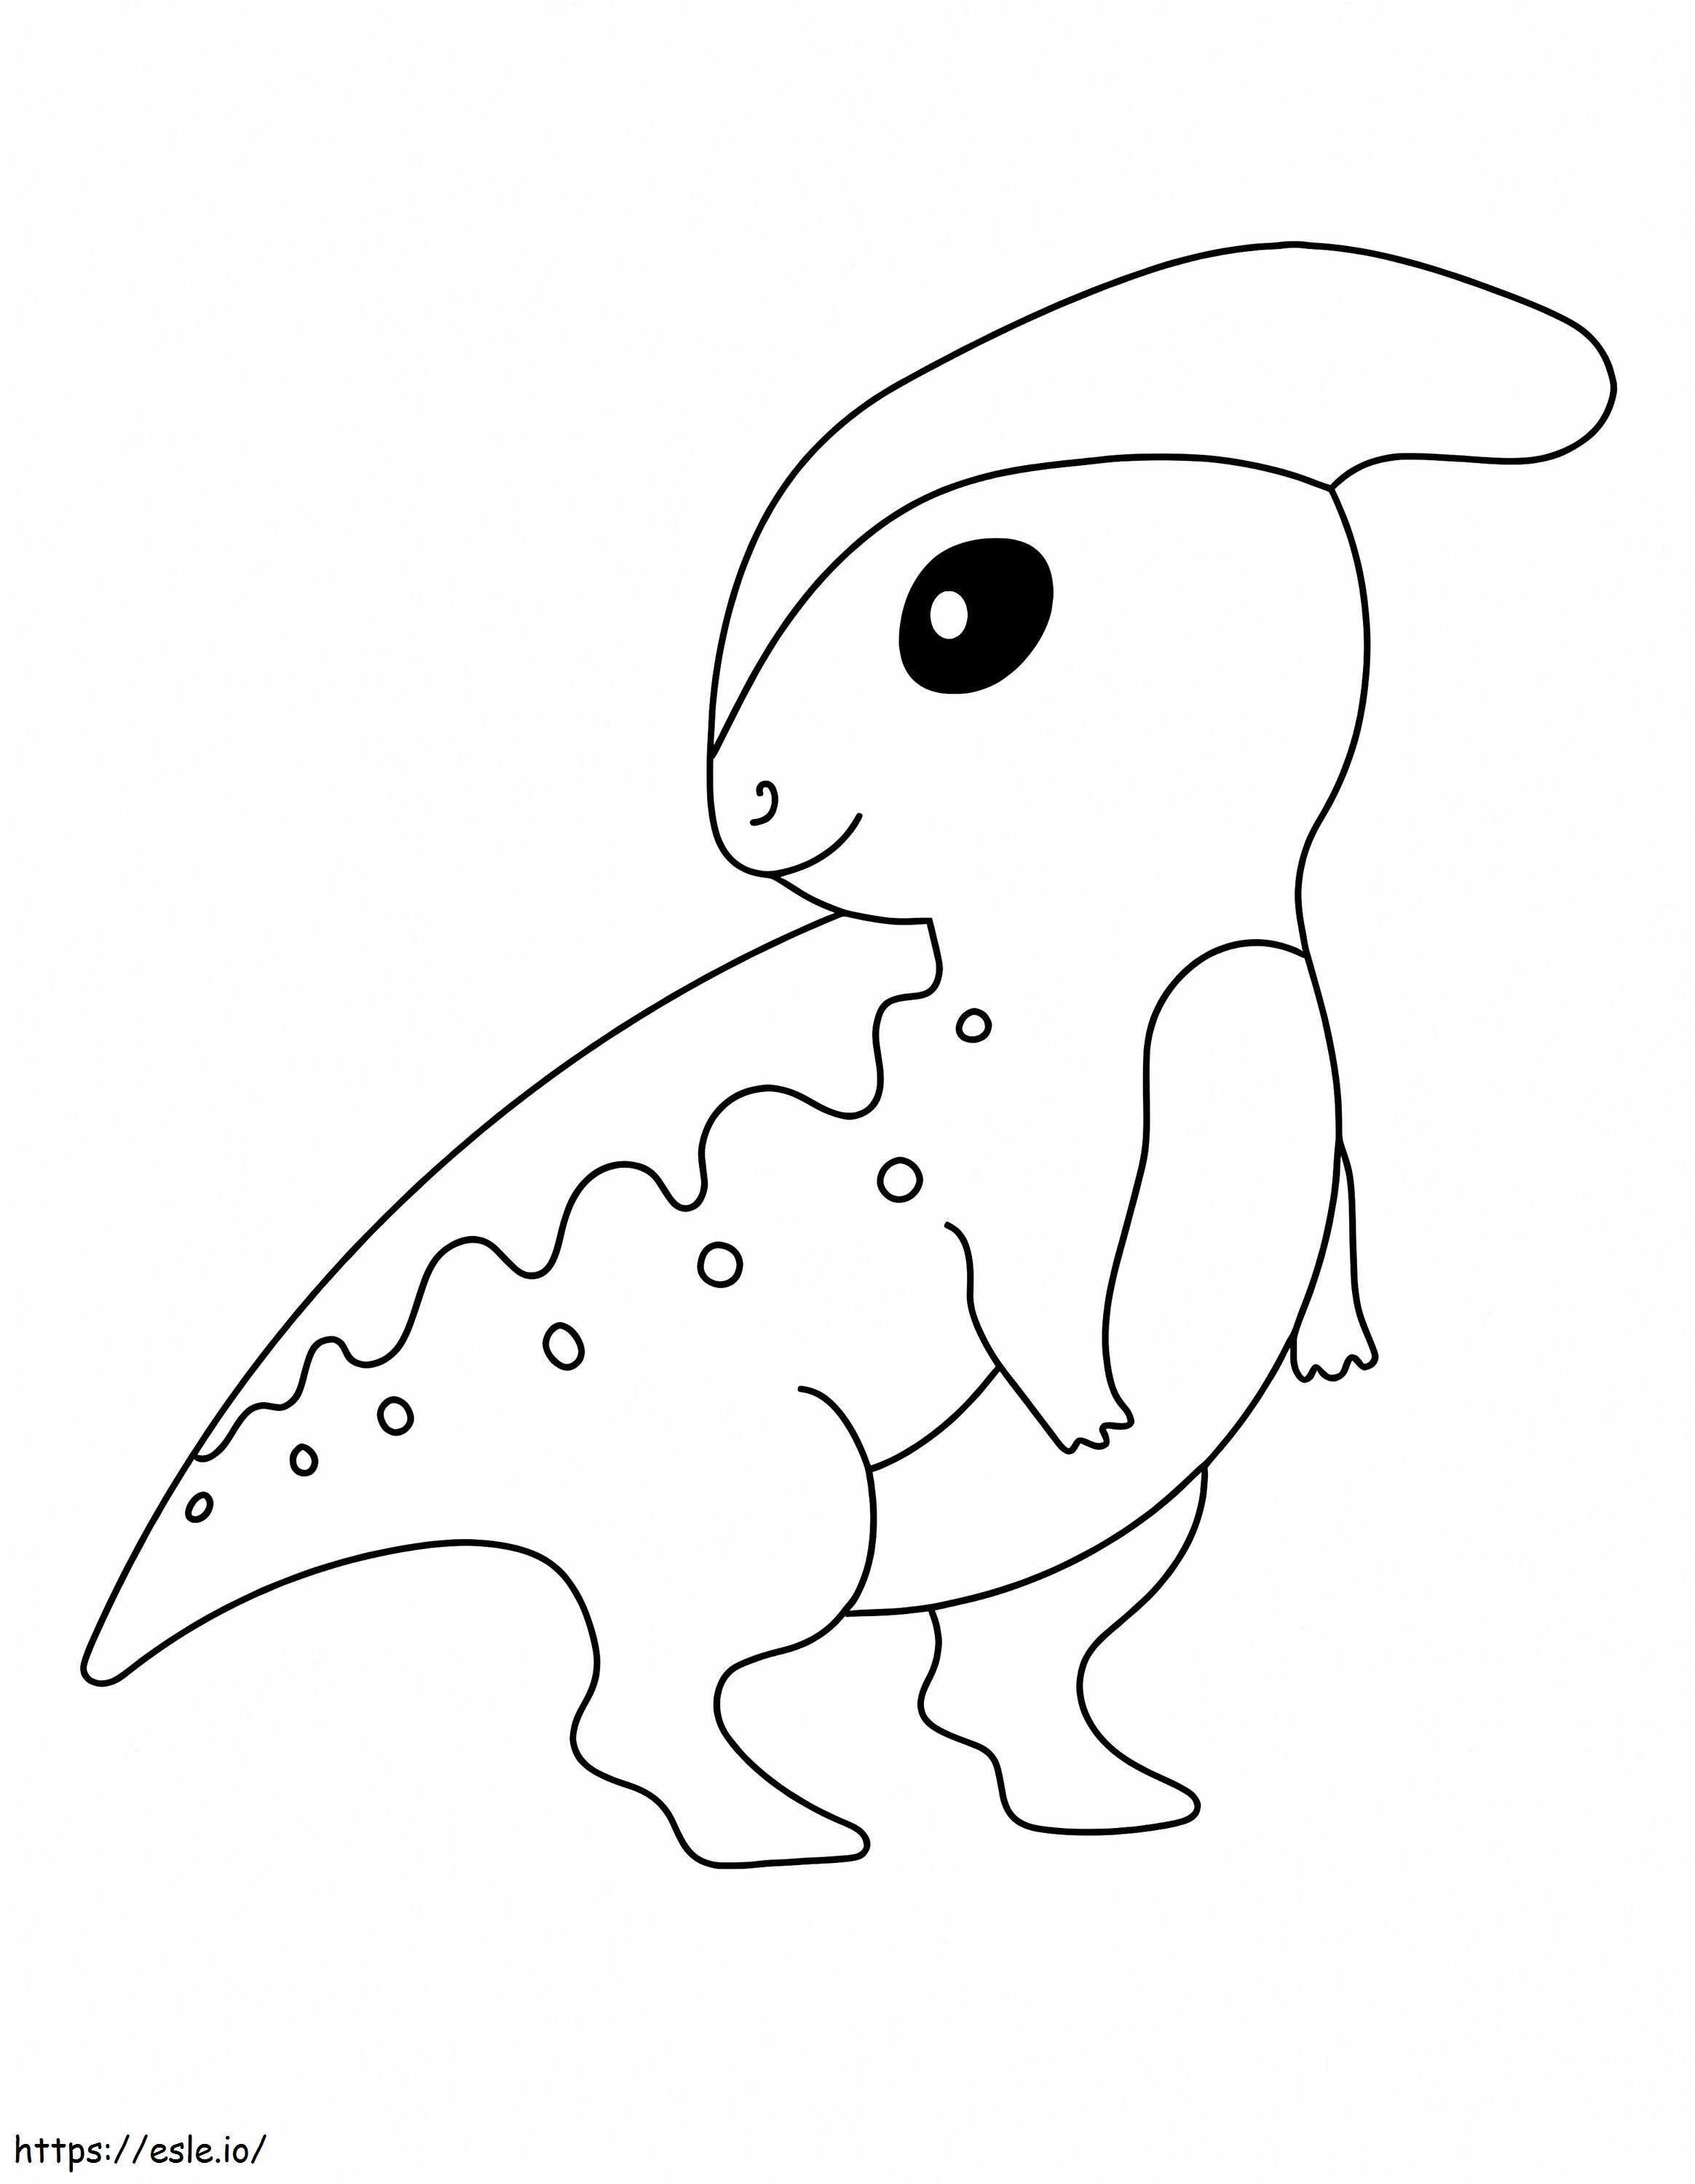 Cute Parasaurolophus 1 coloring page